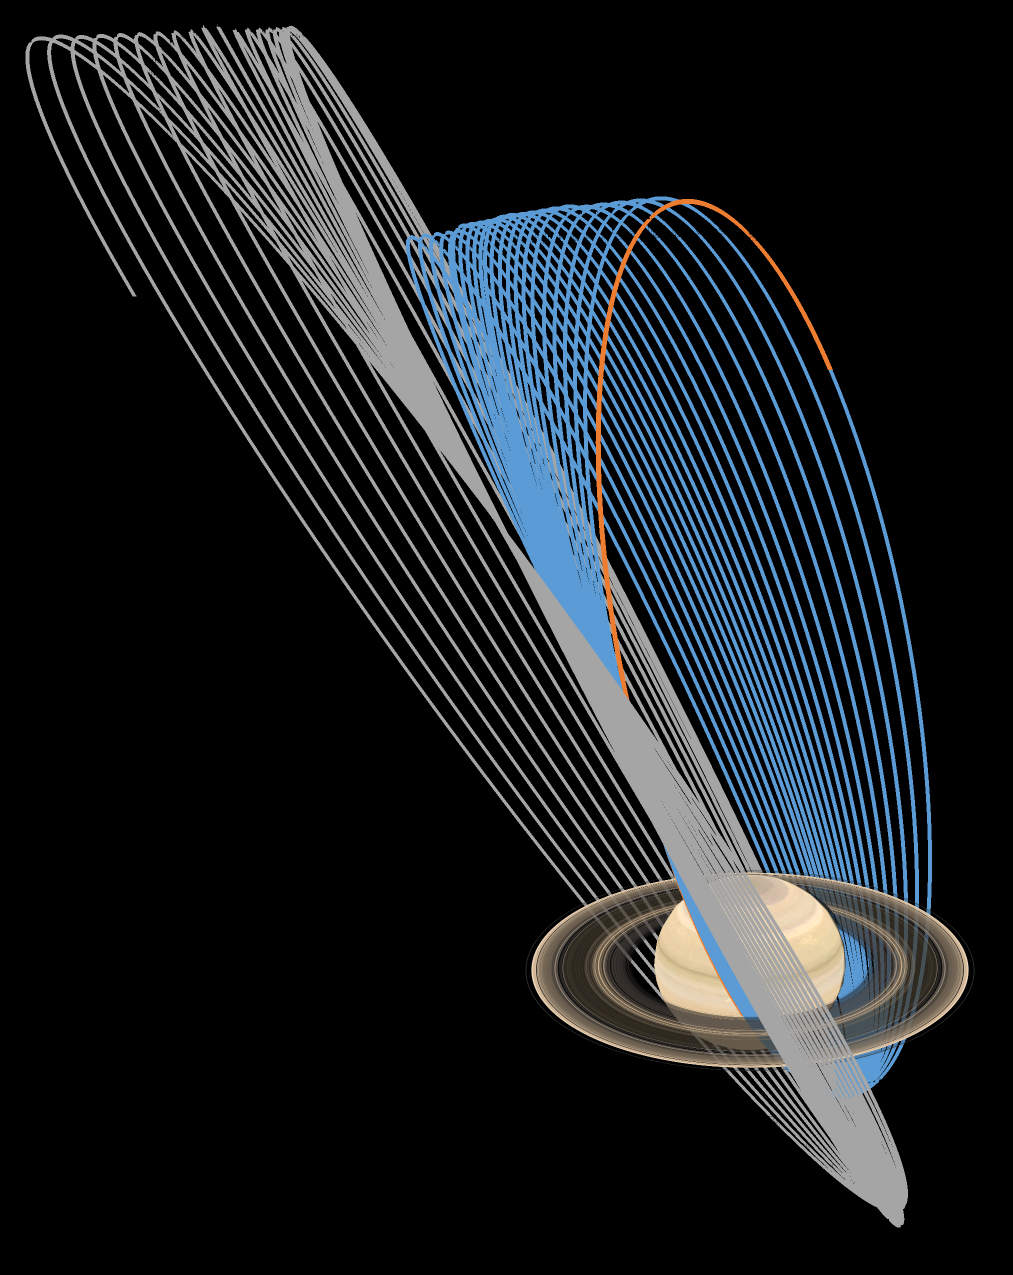 Illustration show Cassini orbiting Saturn.